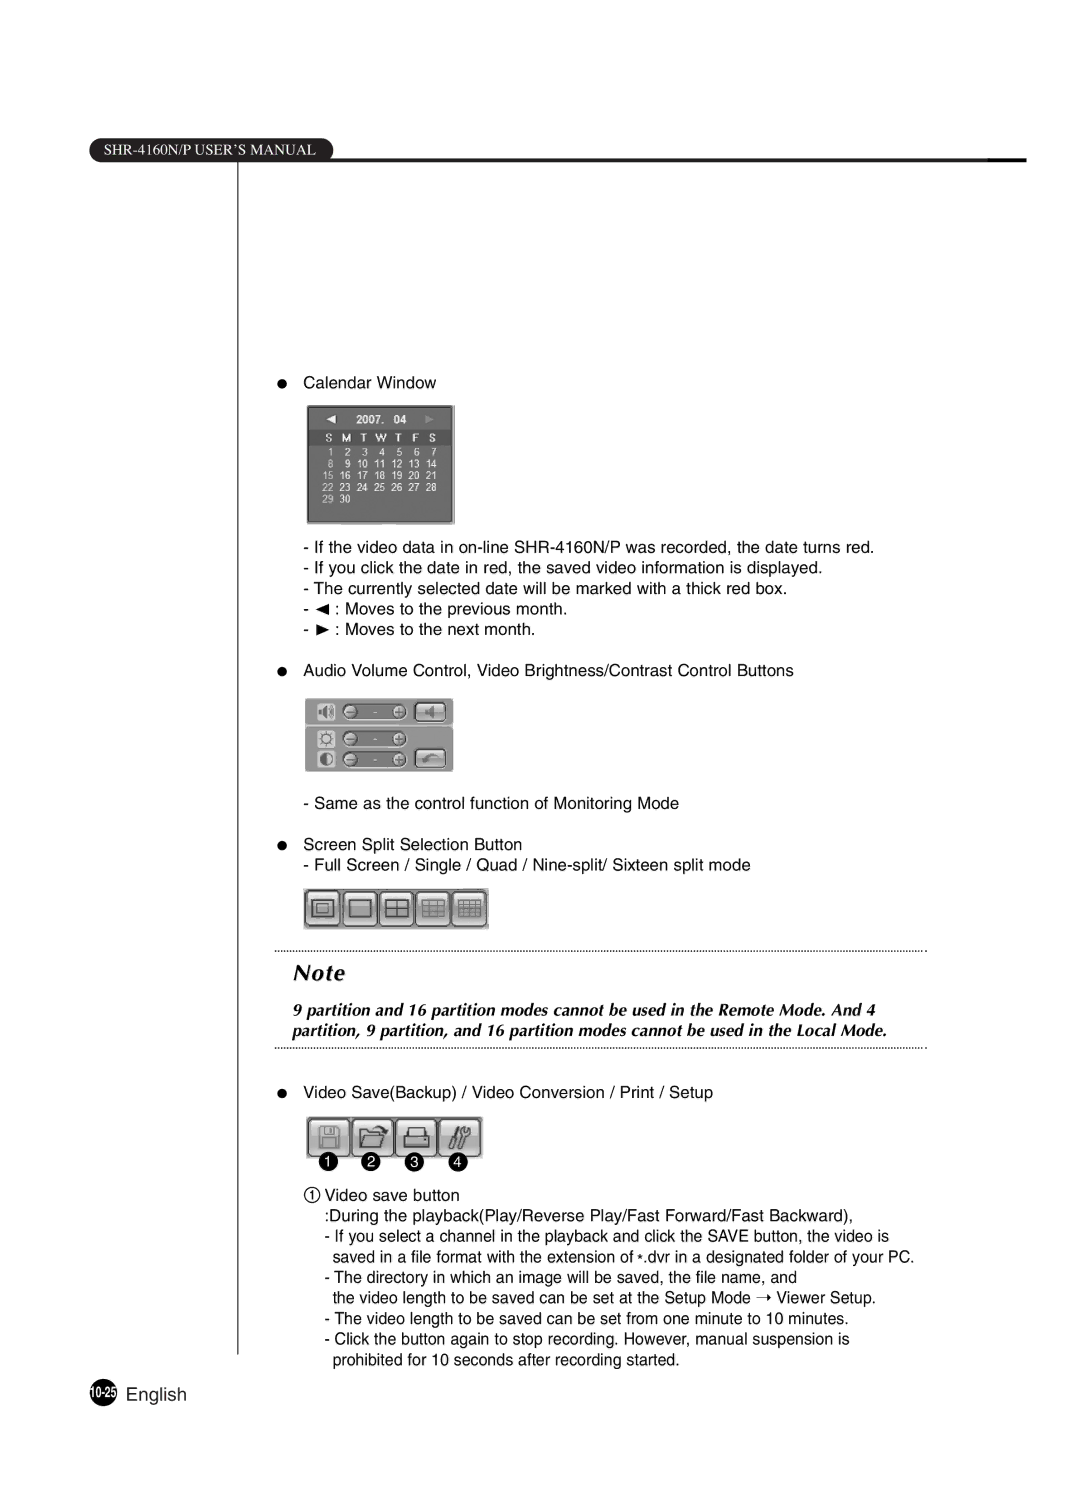 Samsung SHR-4160P manual 10-25English 